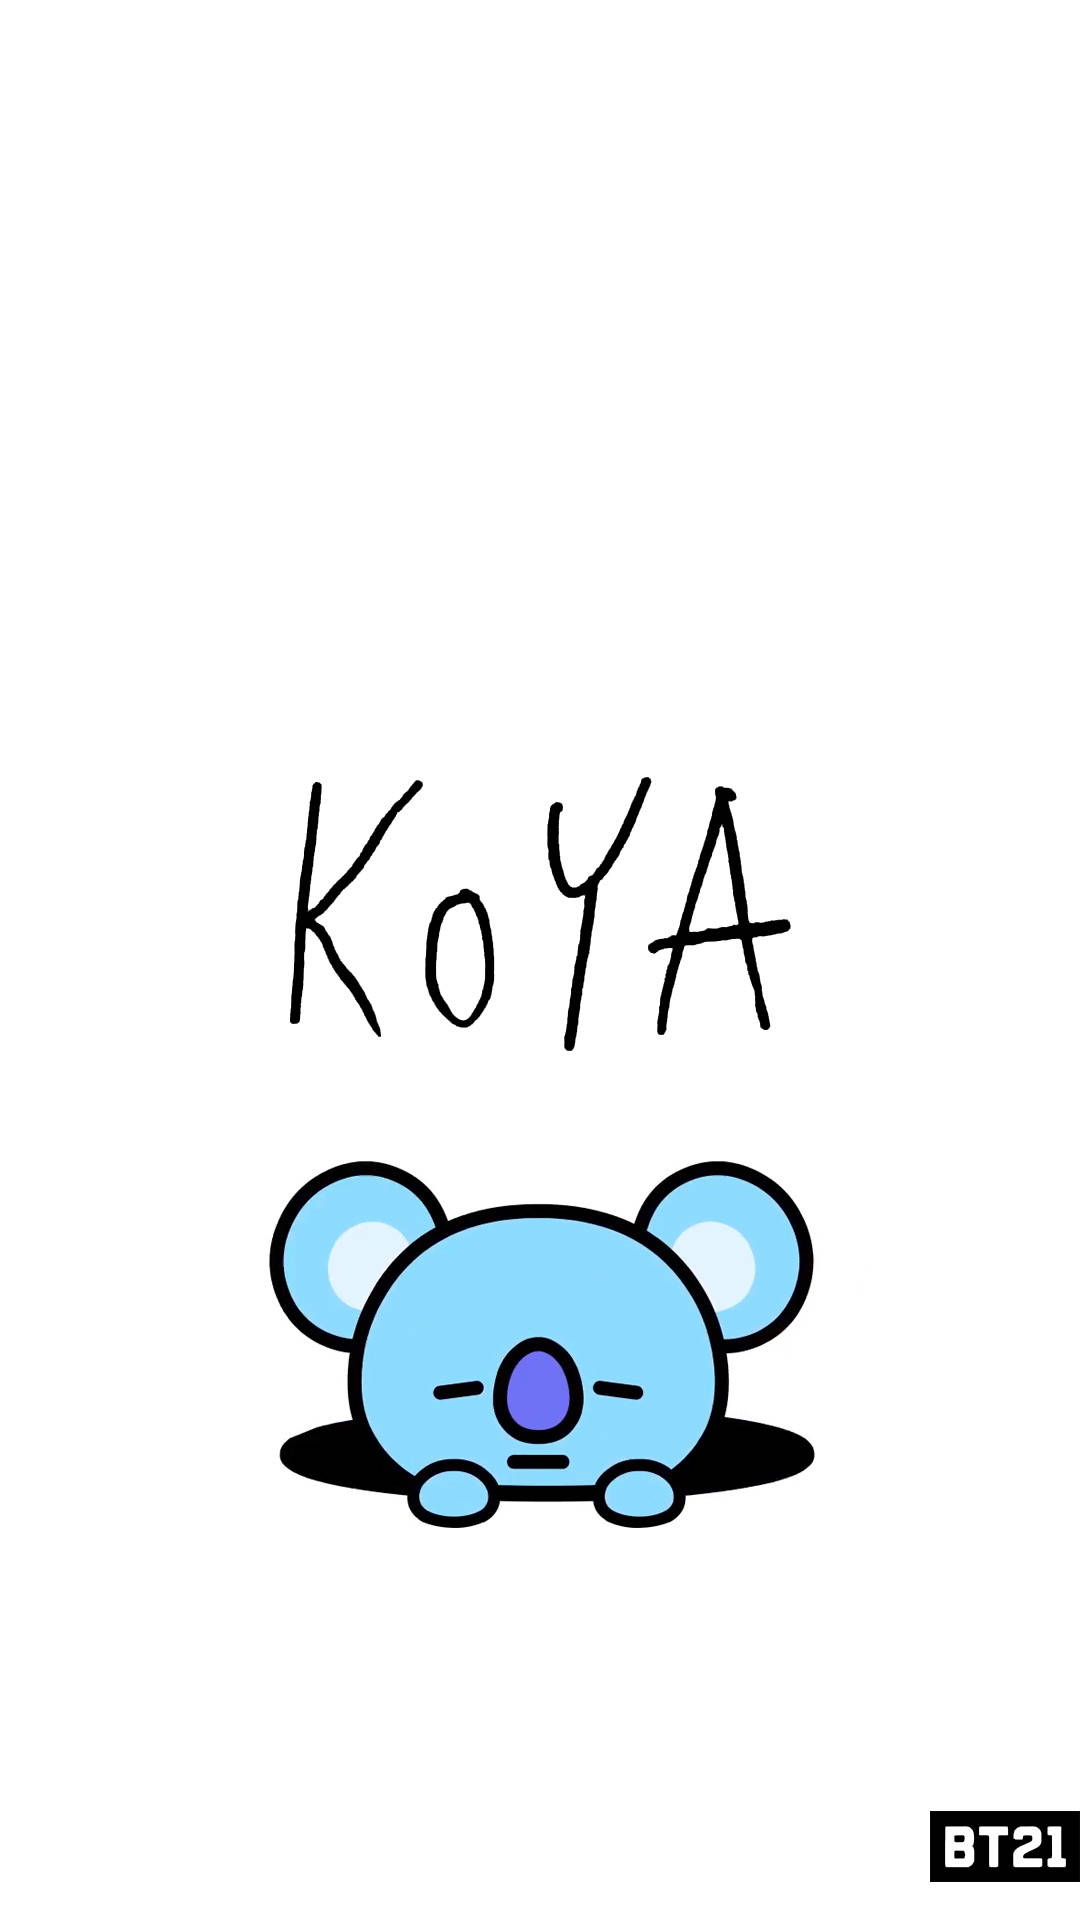 Free Koya Bt21 Wallpaper Downloads, [100+] Koya Bt21 Wallpapers for FREE |  